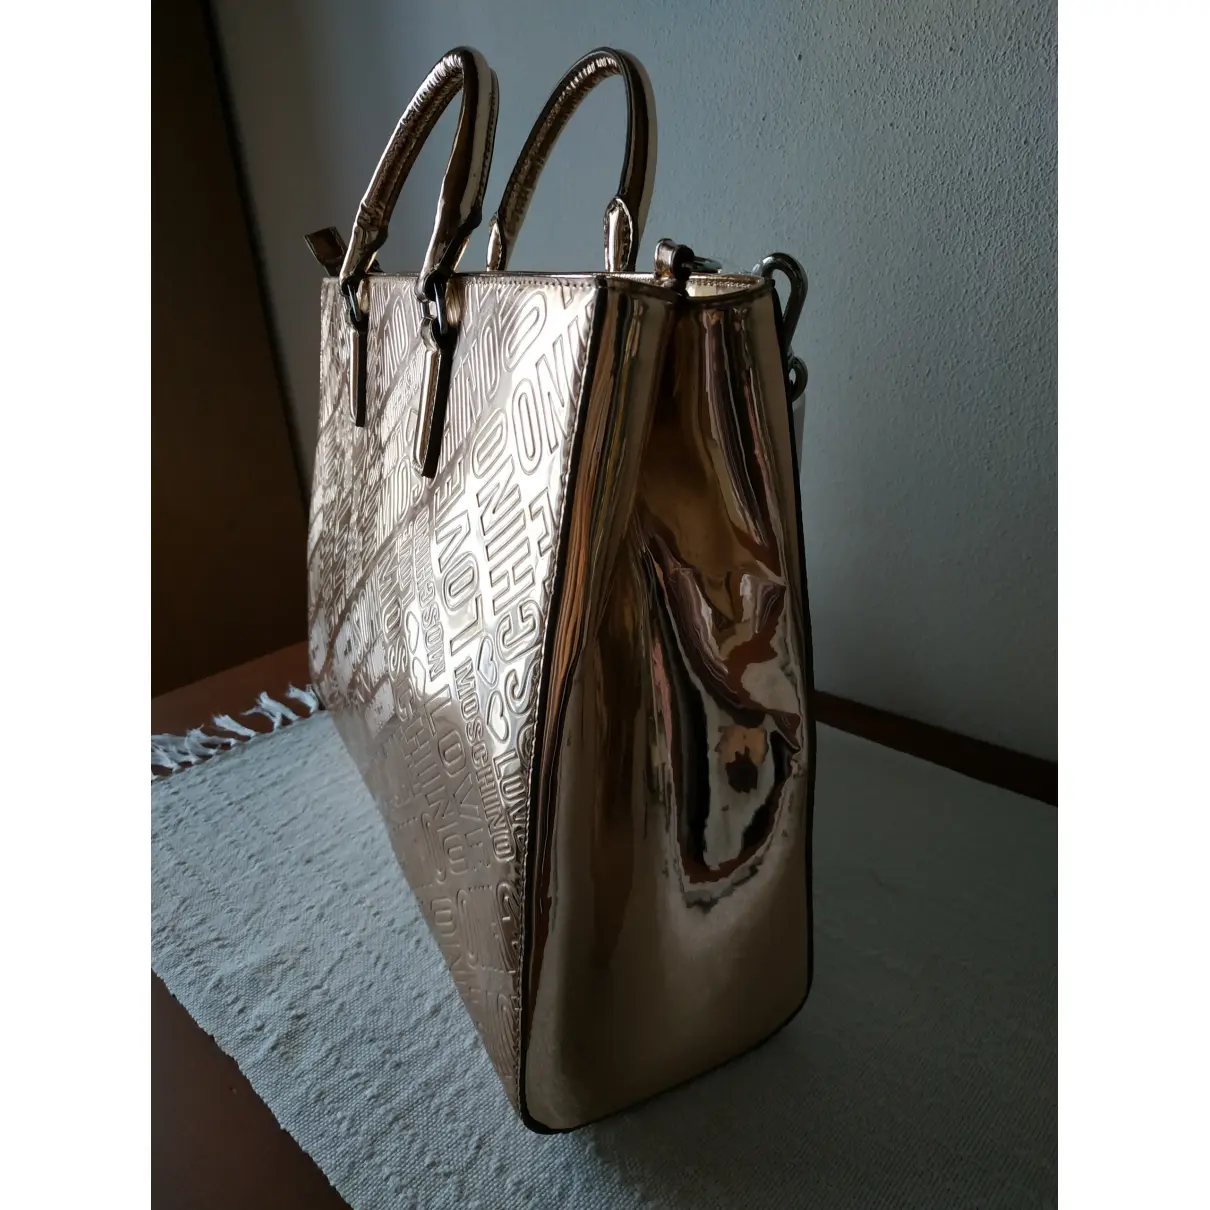 Patent leather handbag Moschino Love